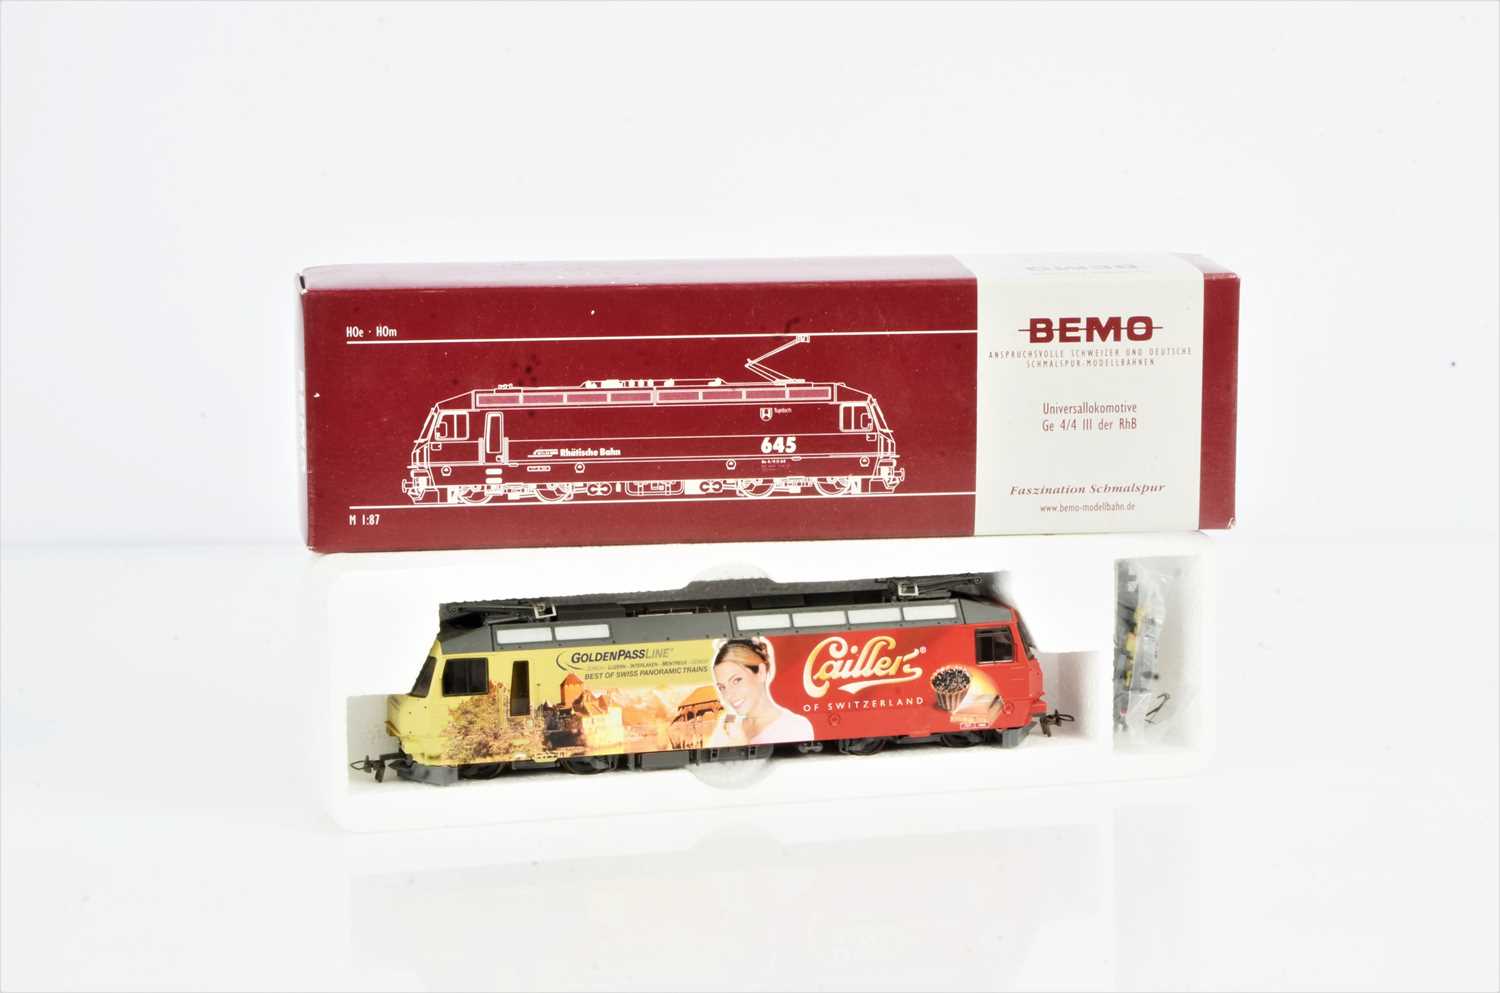 Lot 11 - Bemo H0m Gauge Swiss Electric Locomotive